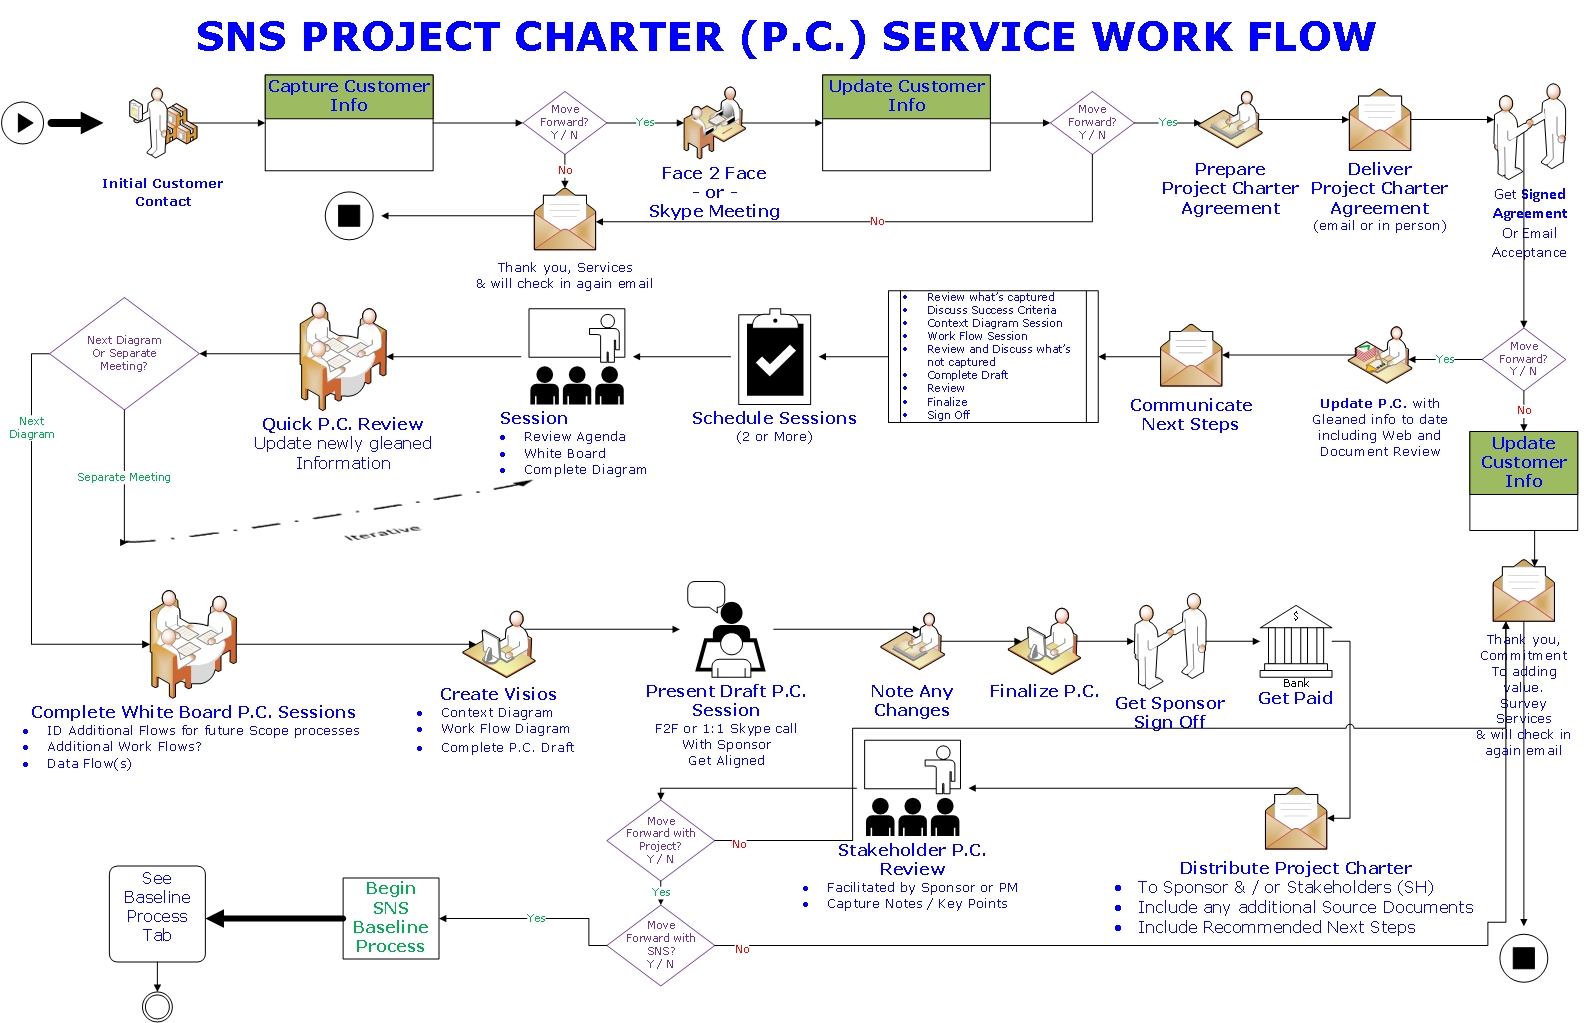 Project Charter Service Work Flow Diagram - copy